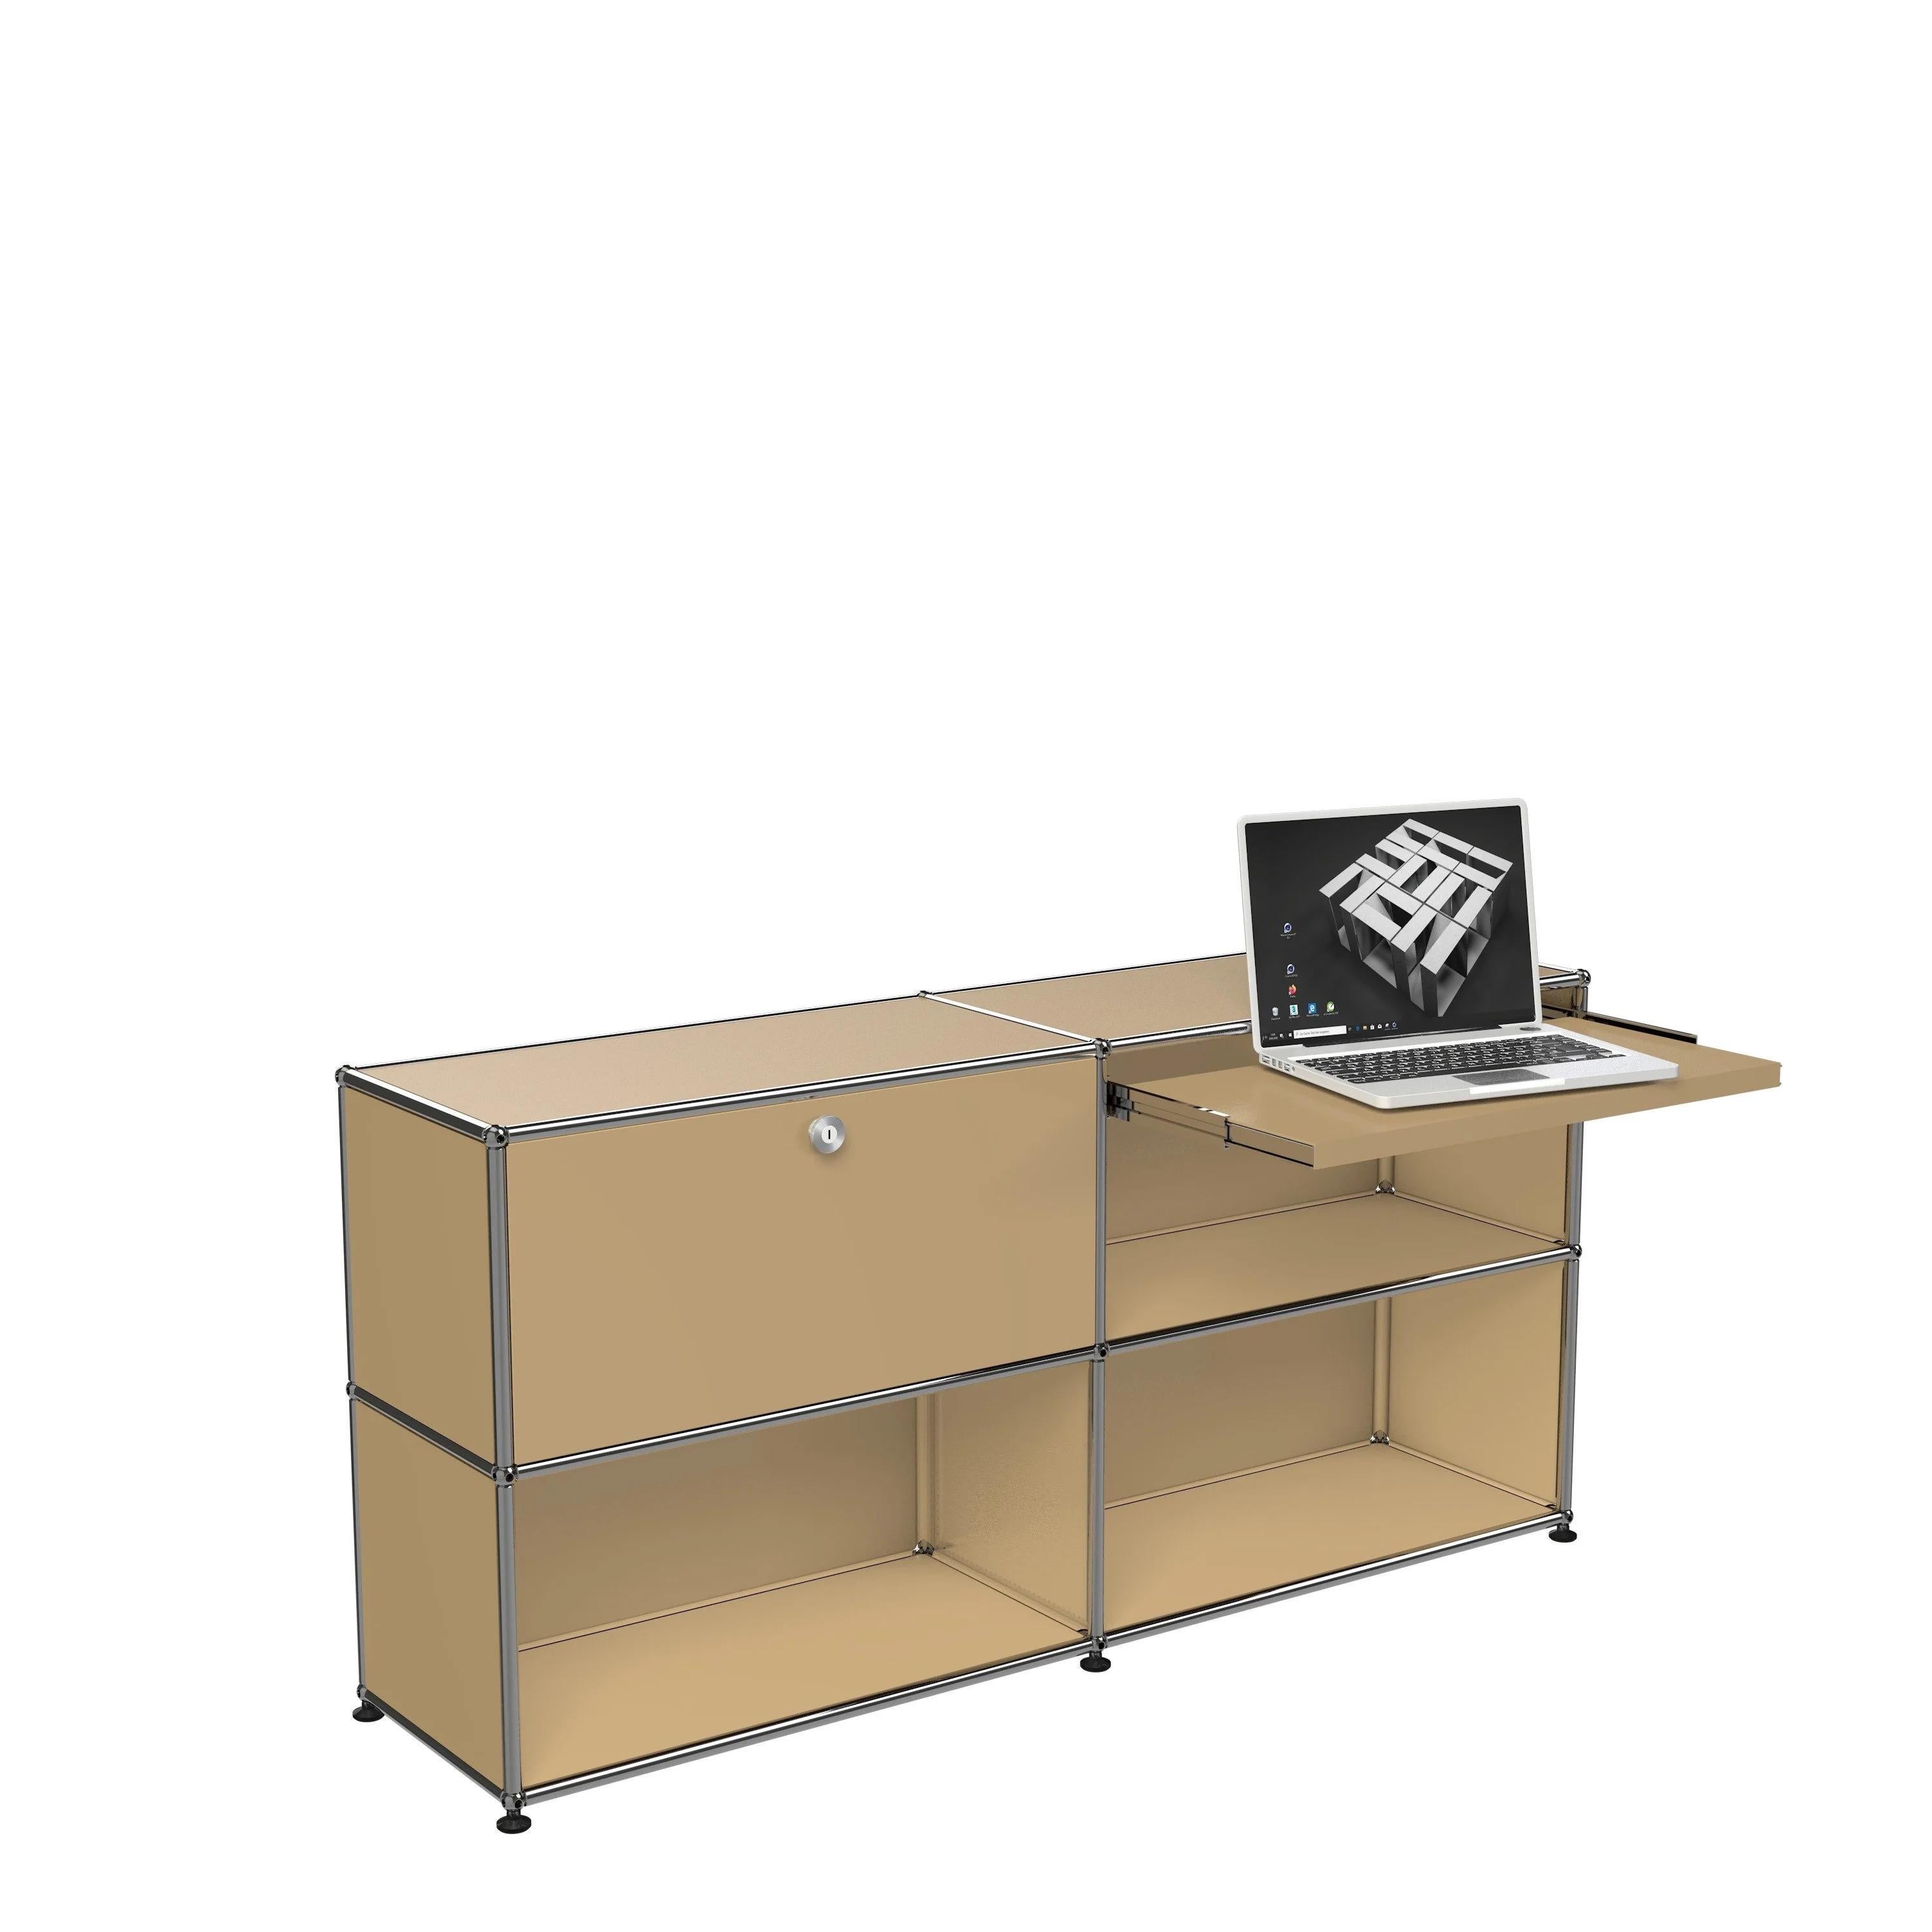 USM Haller Custom Desk Unit 'DU2' Designed by Fritz Haller and Paul Schaerer In New Condition For Sale In New York, NY